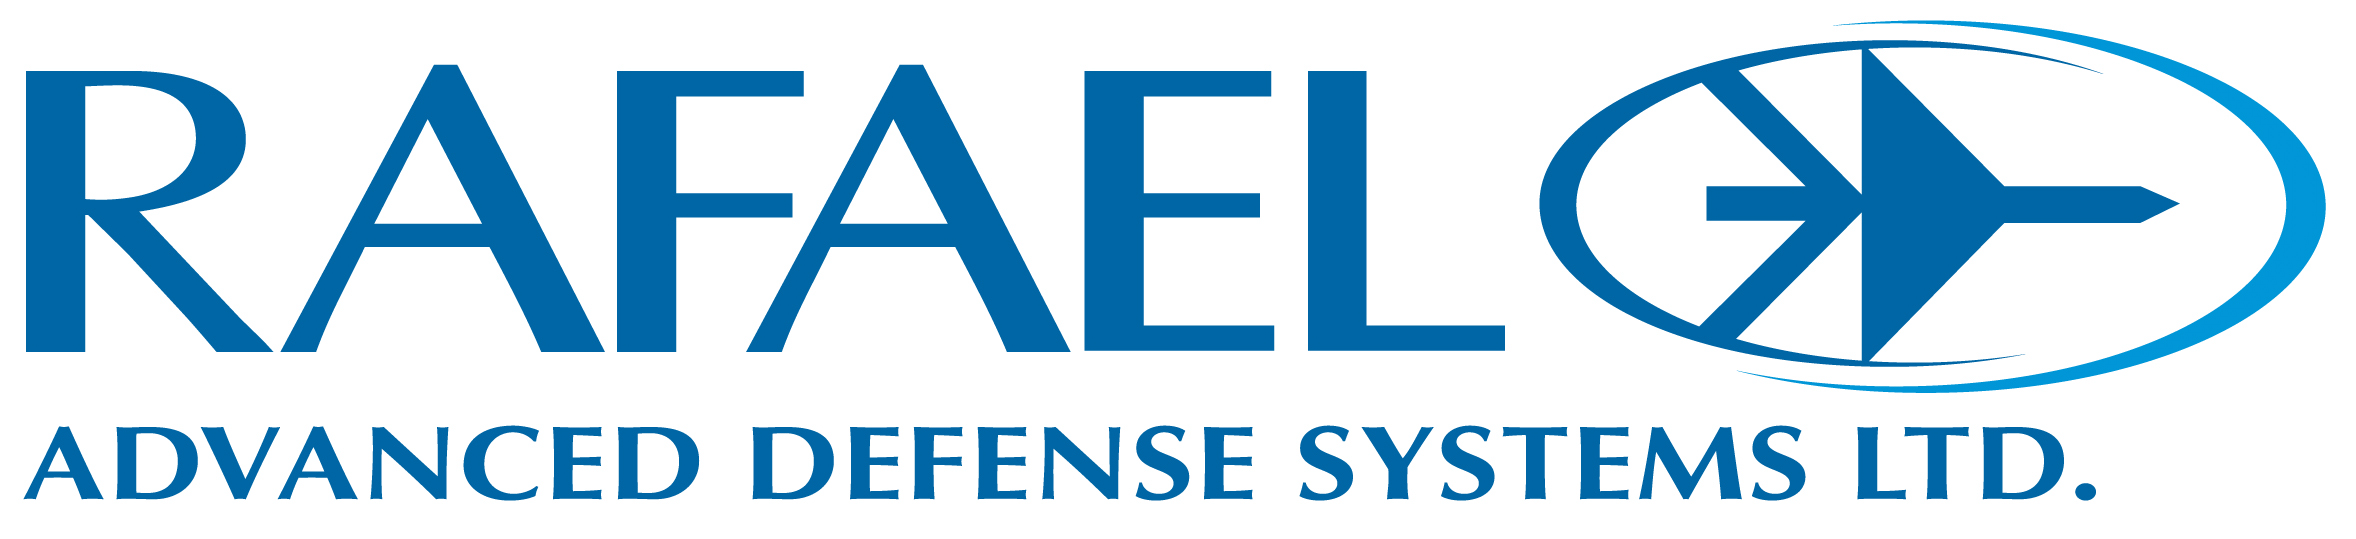 Rafael Advances Deffense Systems